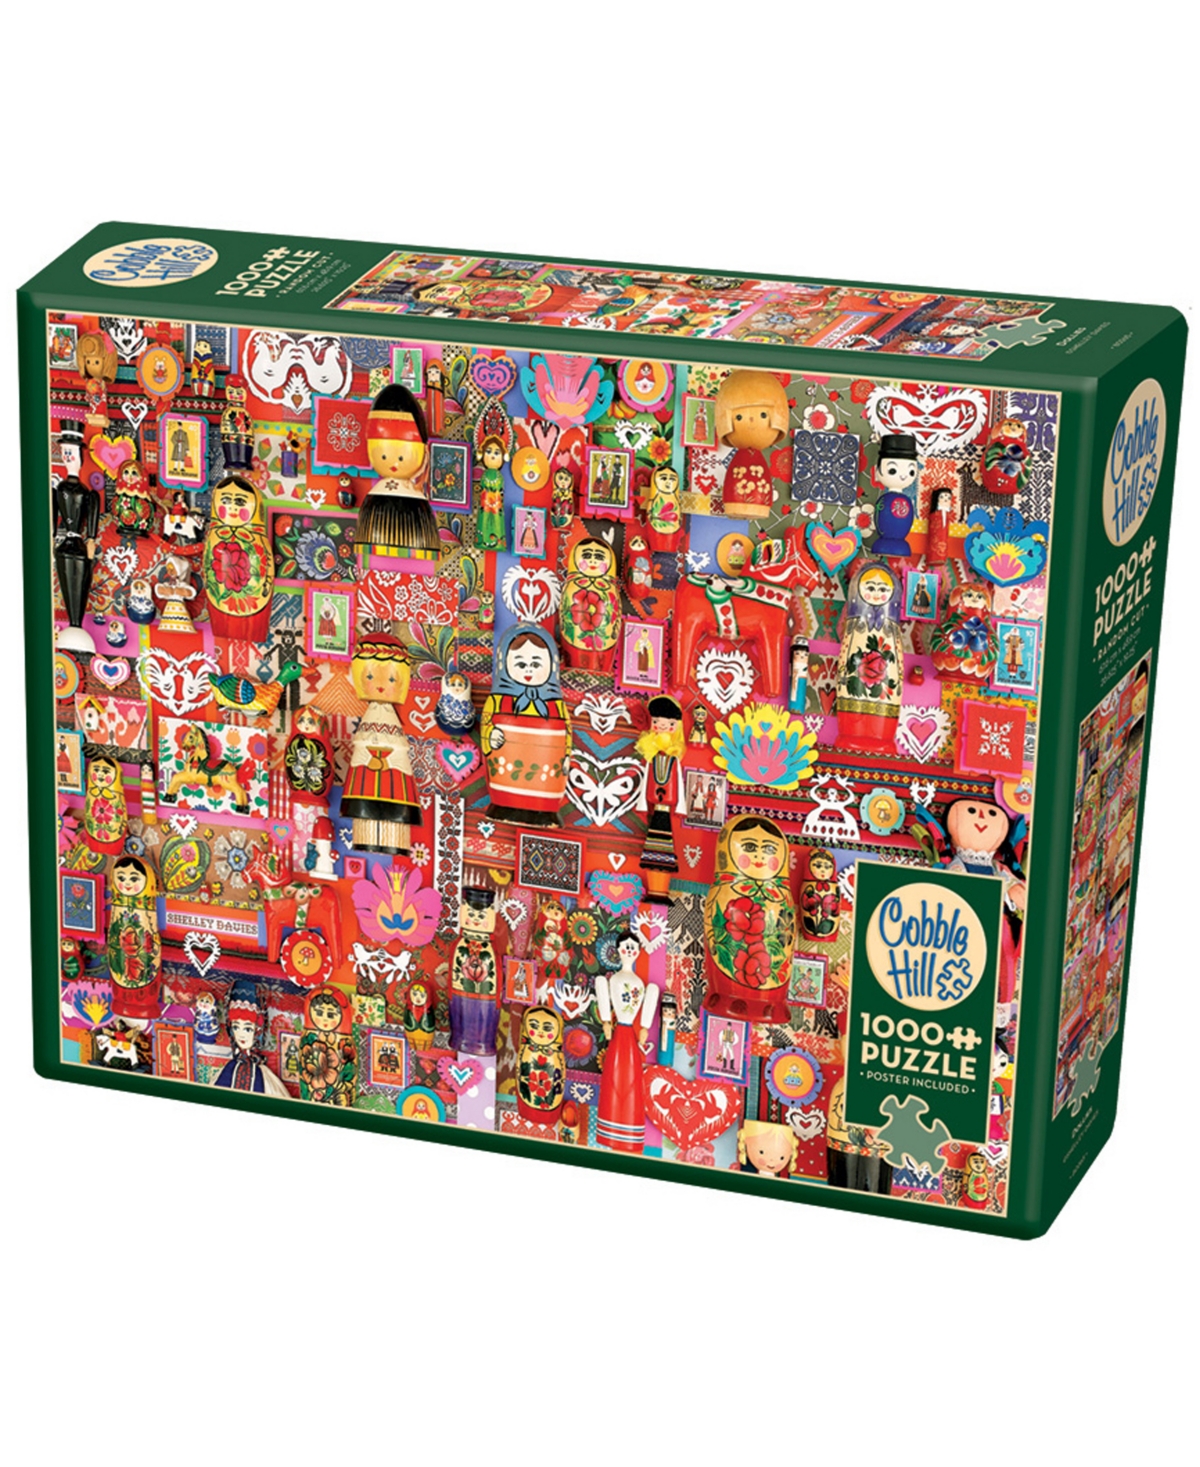 Cobble Hill Puzzle Company Kids' Shelley Davies In No Color